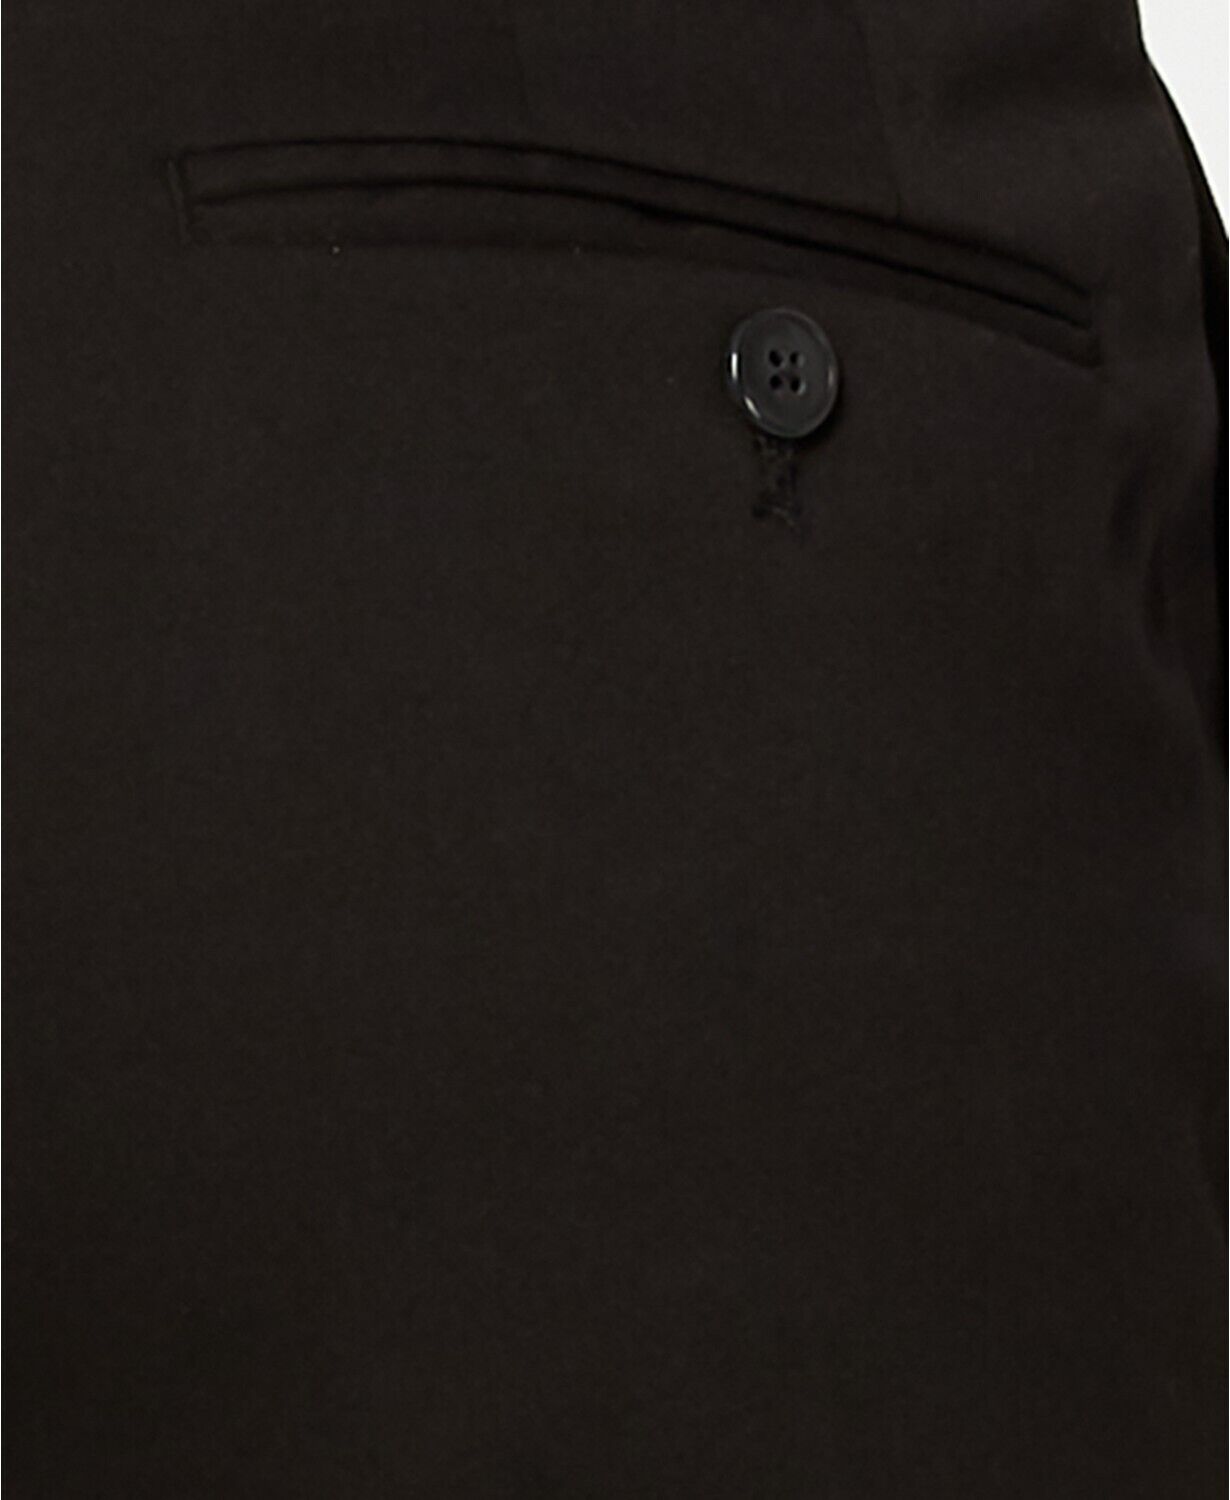 Vince Camuto Mens Slim-fit Stretch Solid Flat Front Dress Pants Black 30 X 32